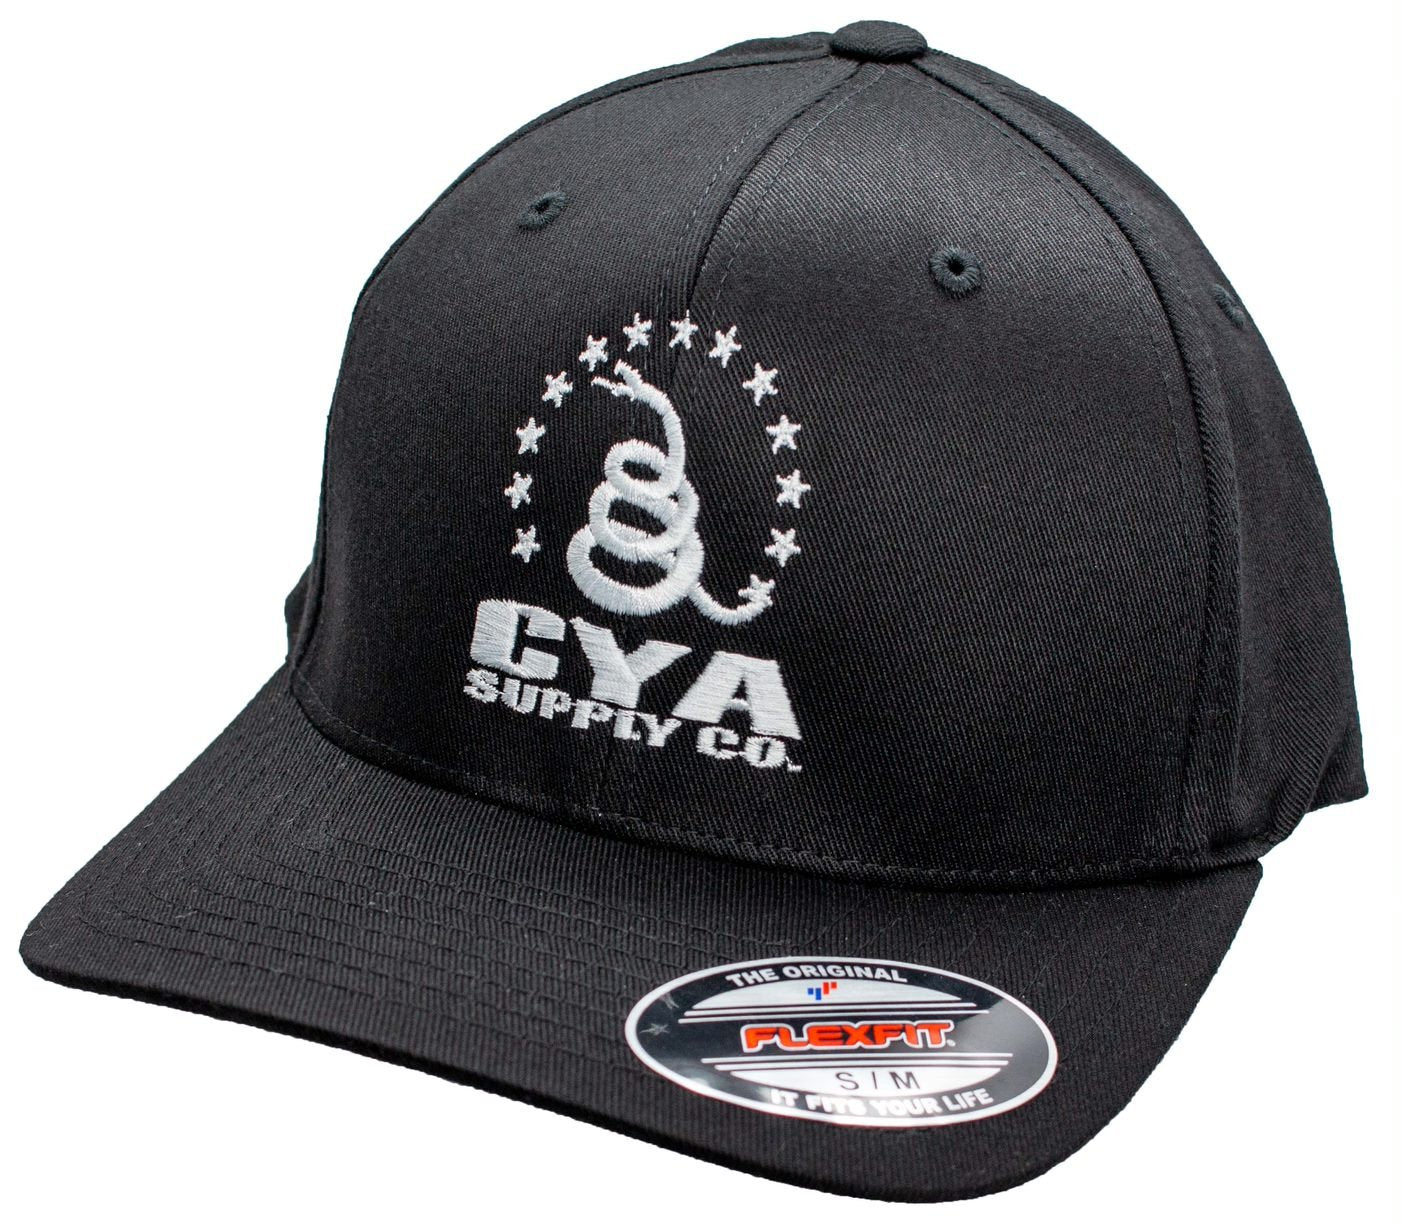 FLEXFIT FITTED CAP BLACK CYA Supply Co.